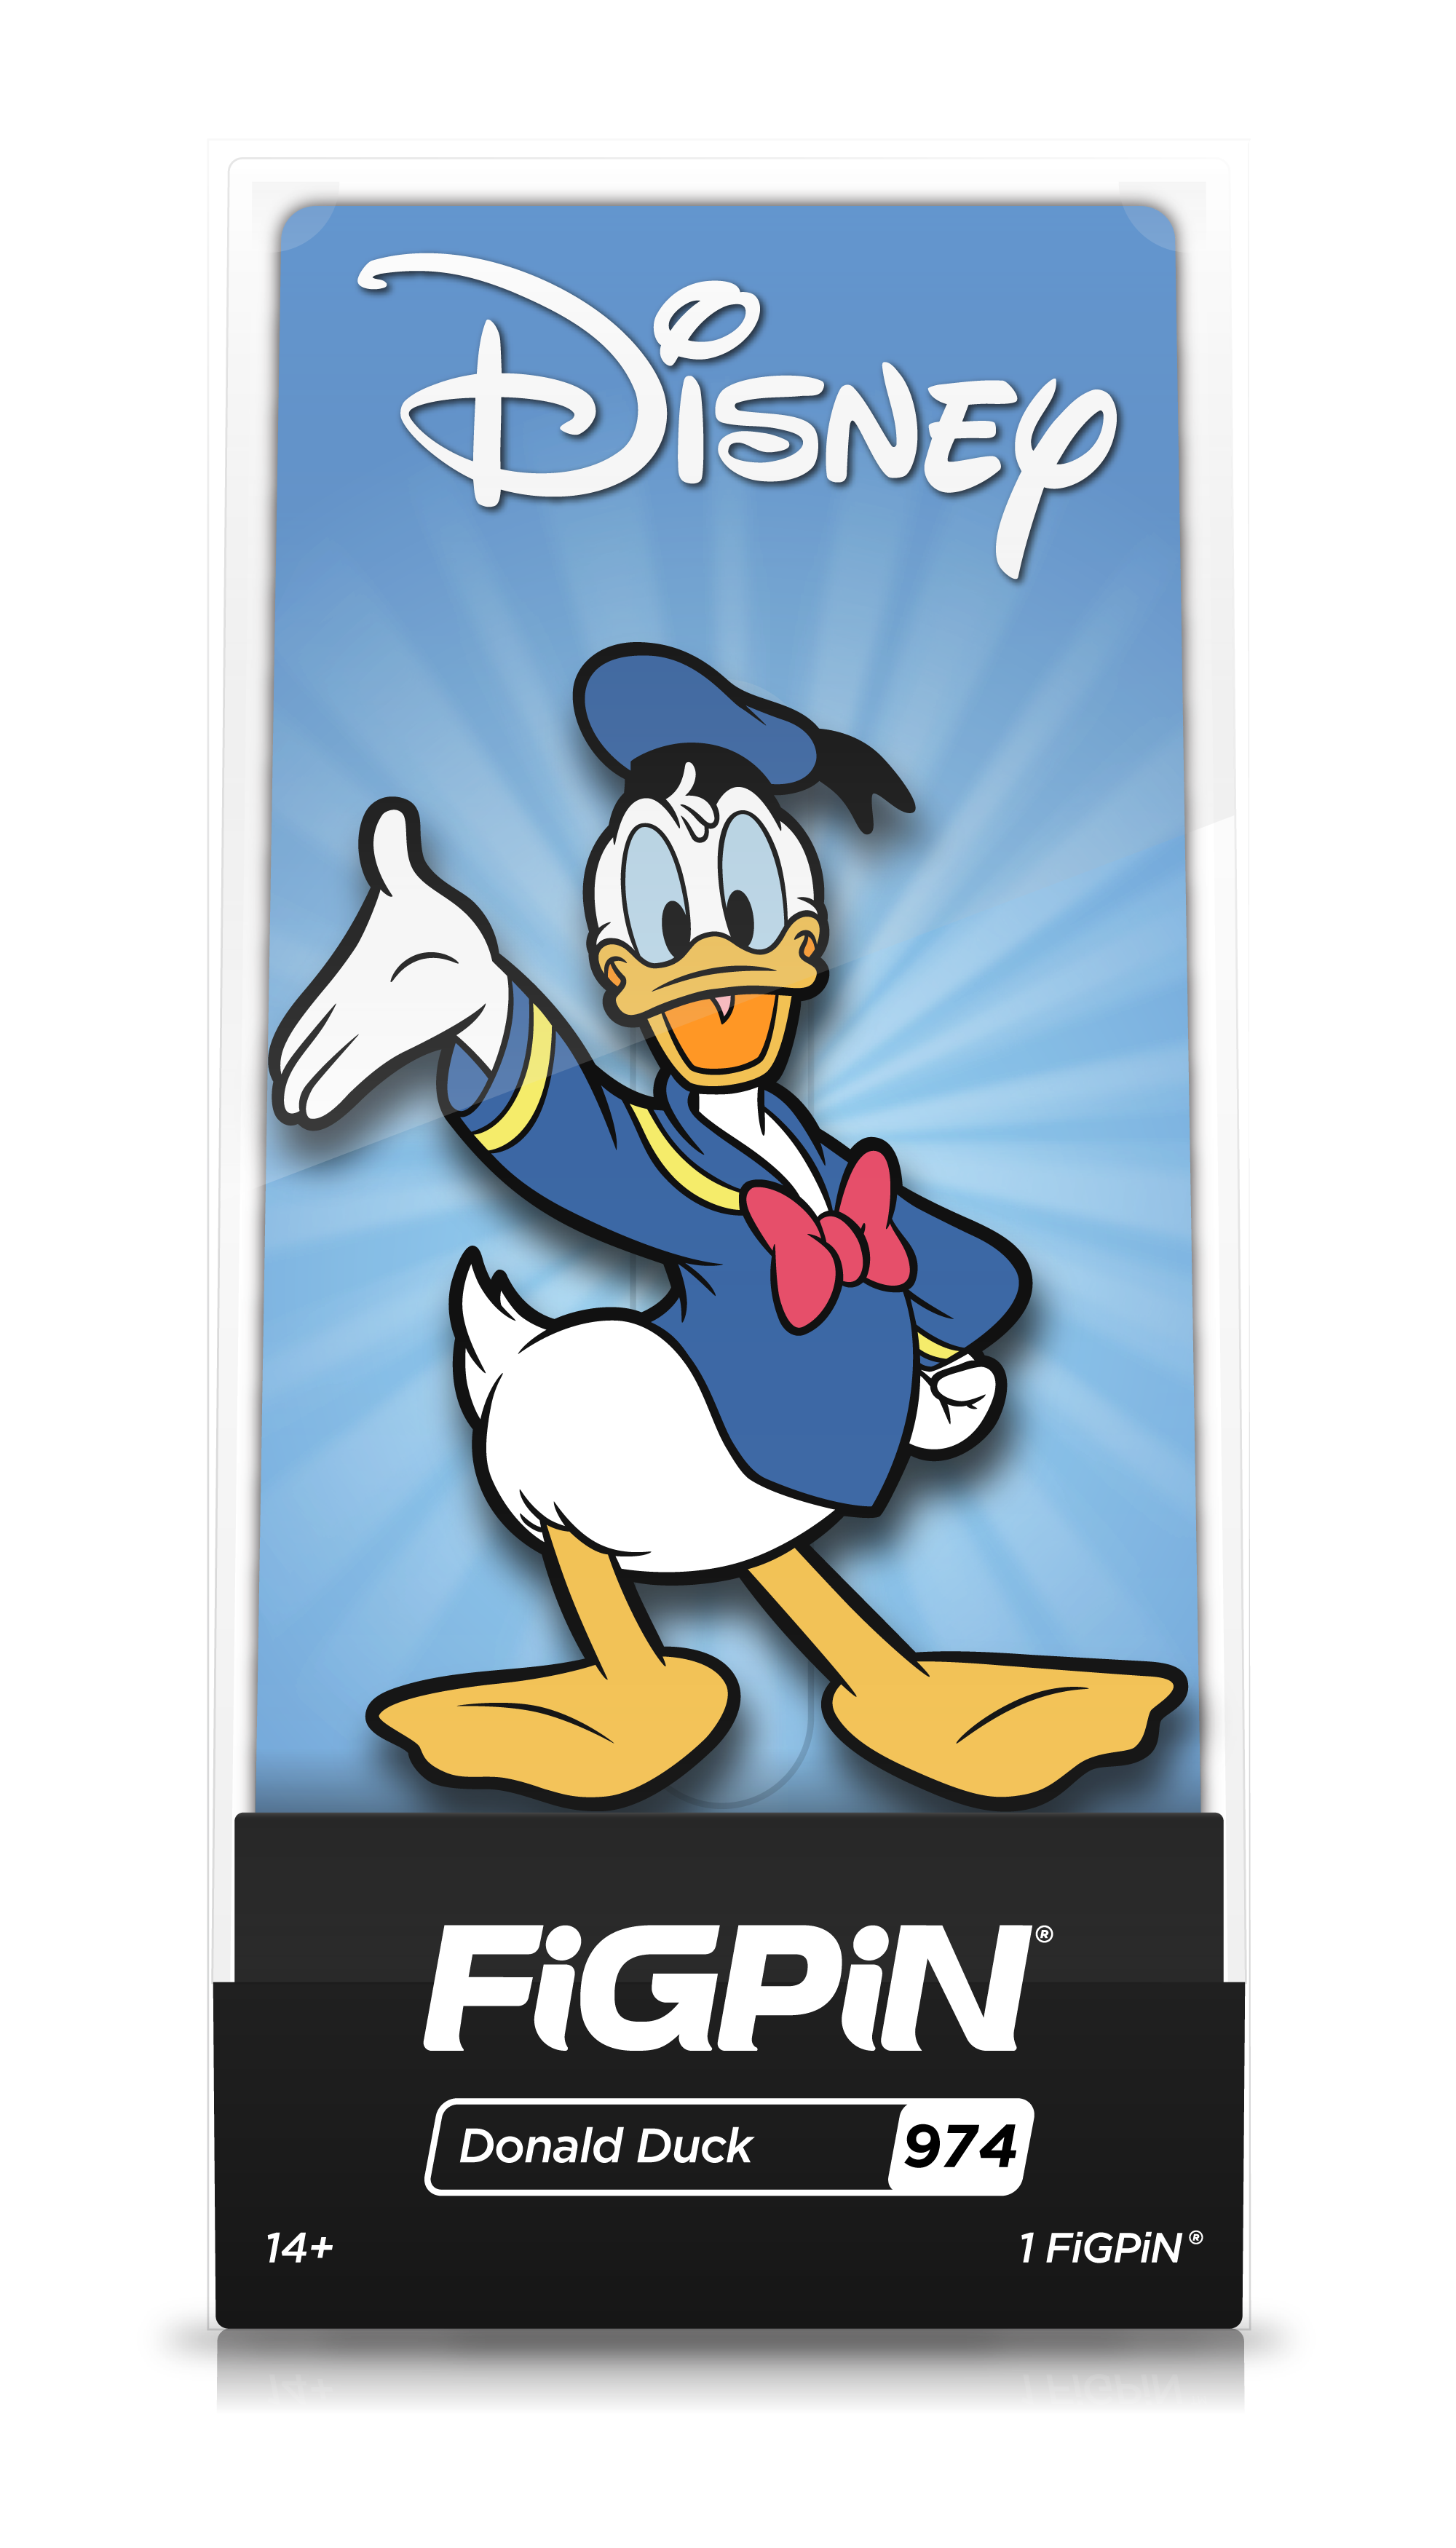 Donald Duck (974)